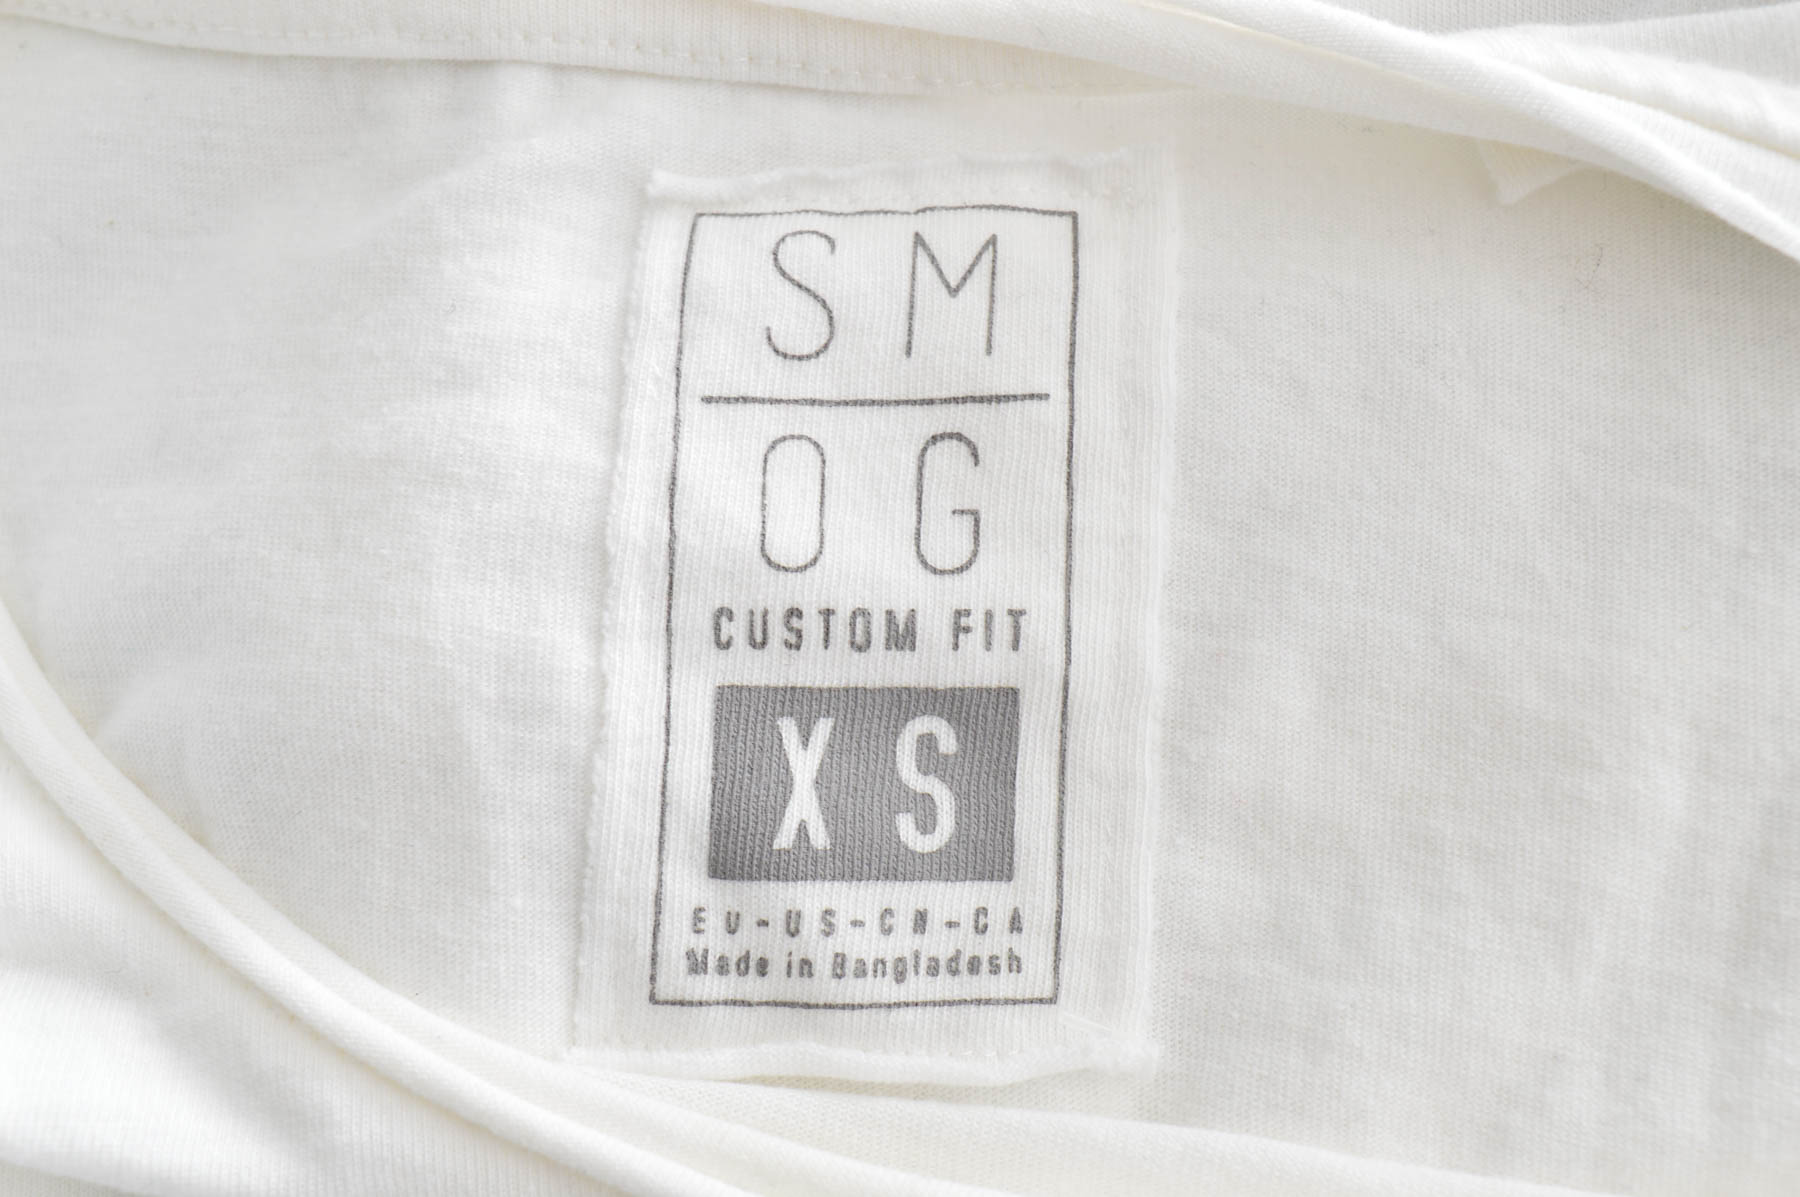 Men's T-shirt - SMOG - 2